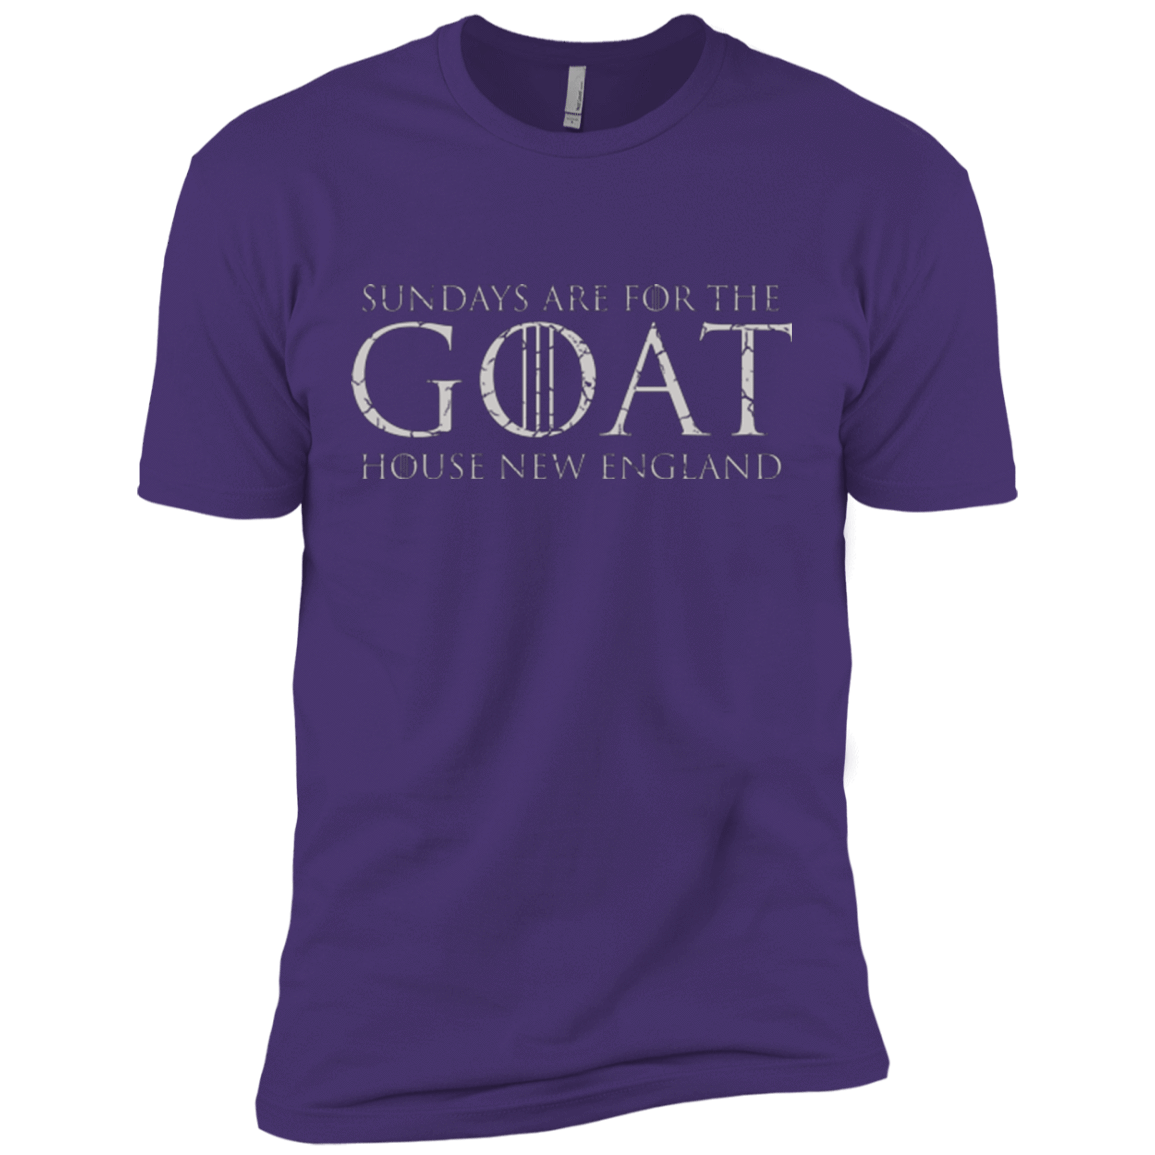 T-Shirts Purple / X-Small GOAT Men's Premium T-Shirt